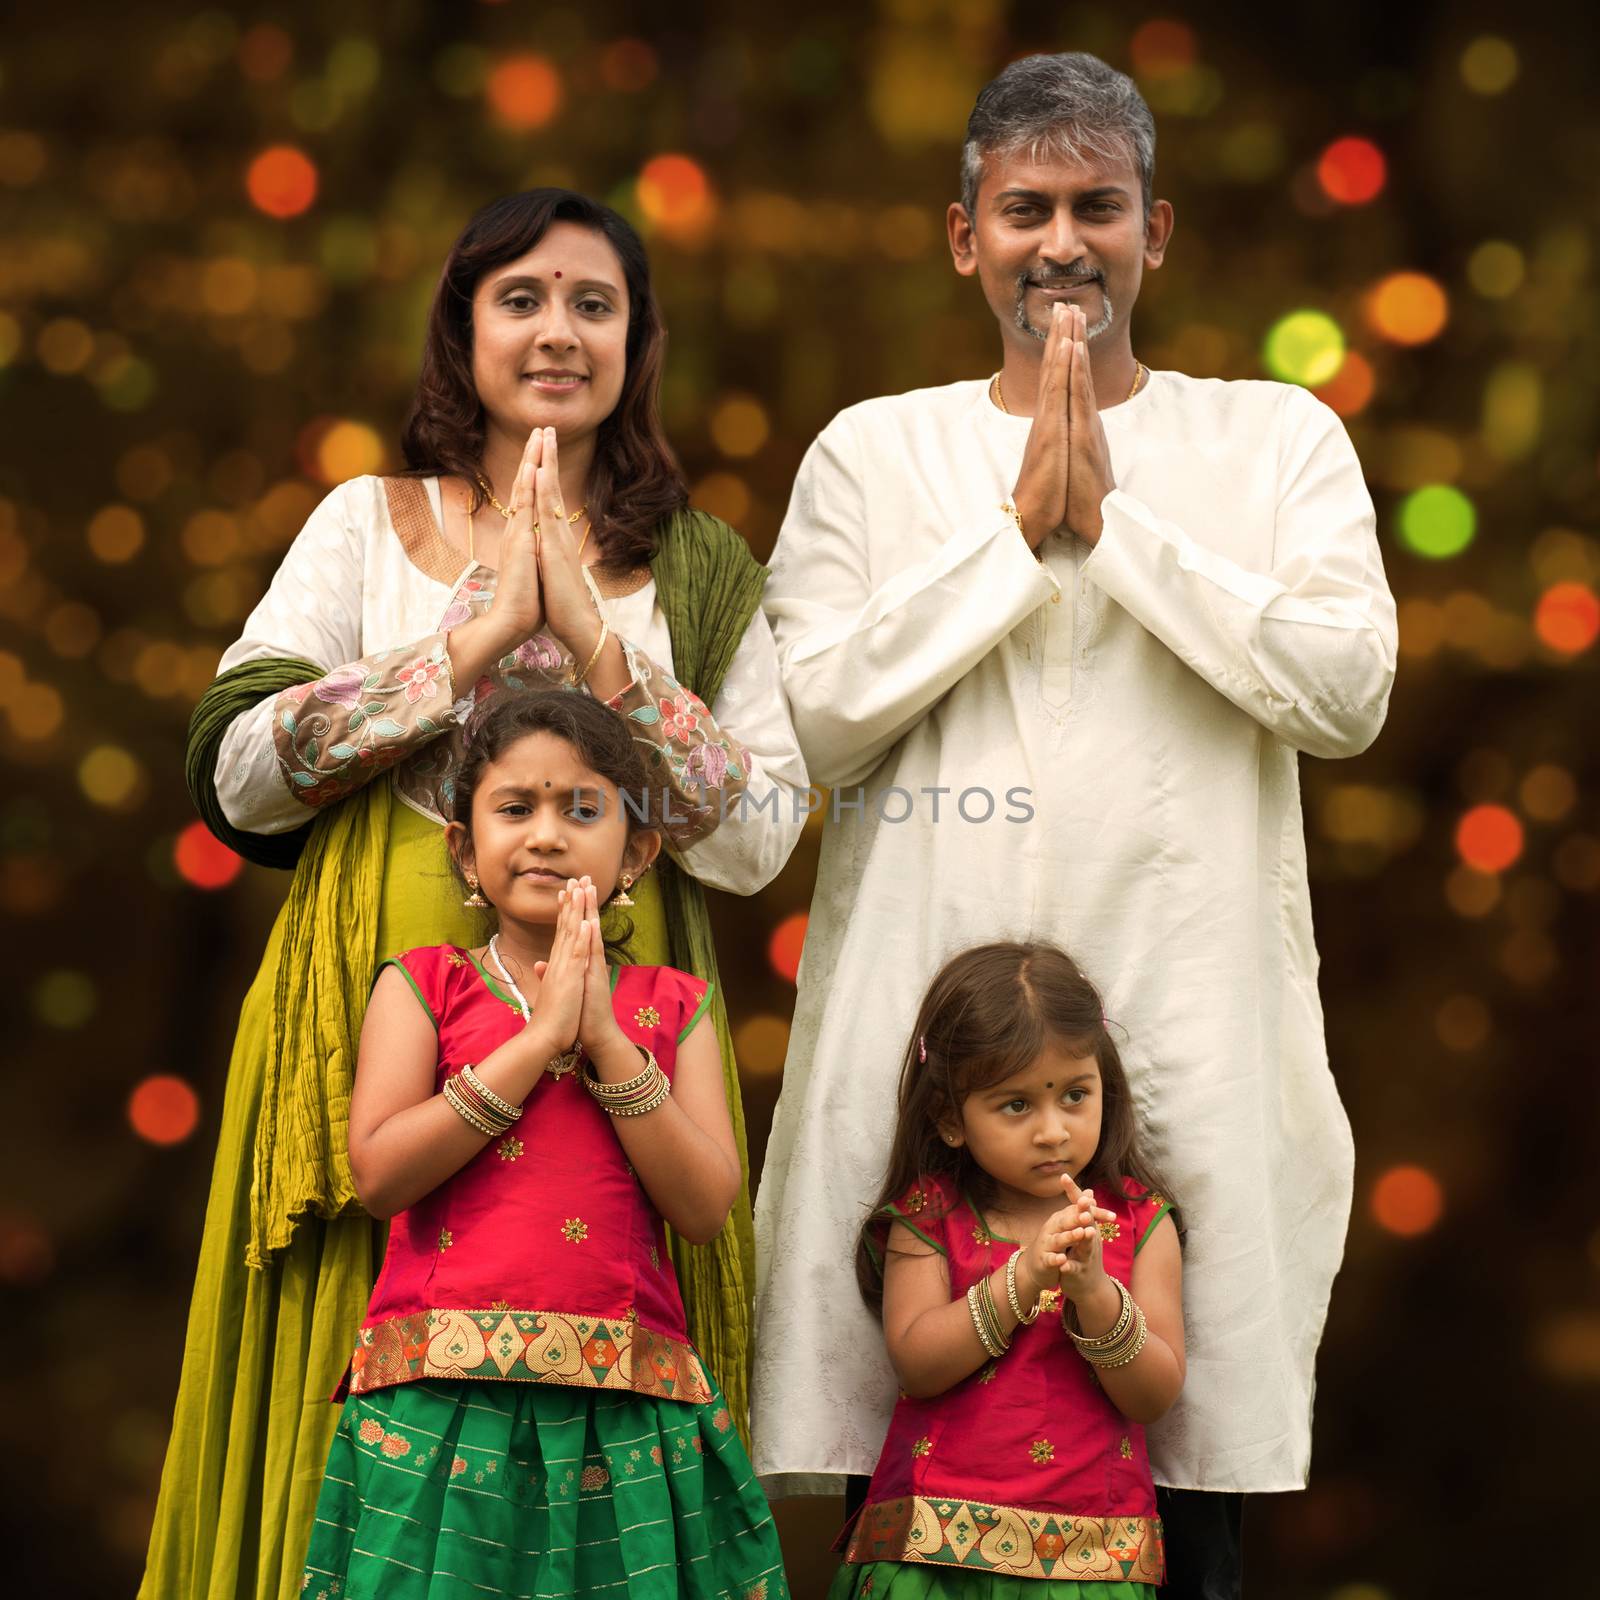 Indian family greeting on diwali by szefei